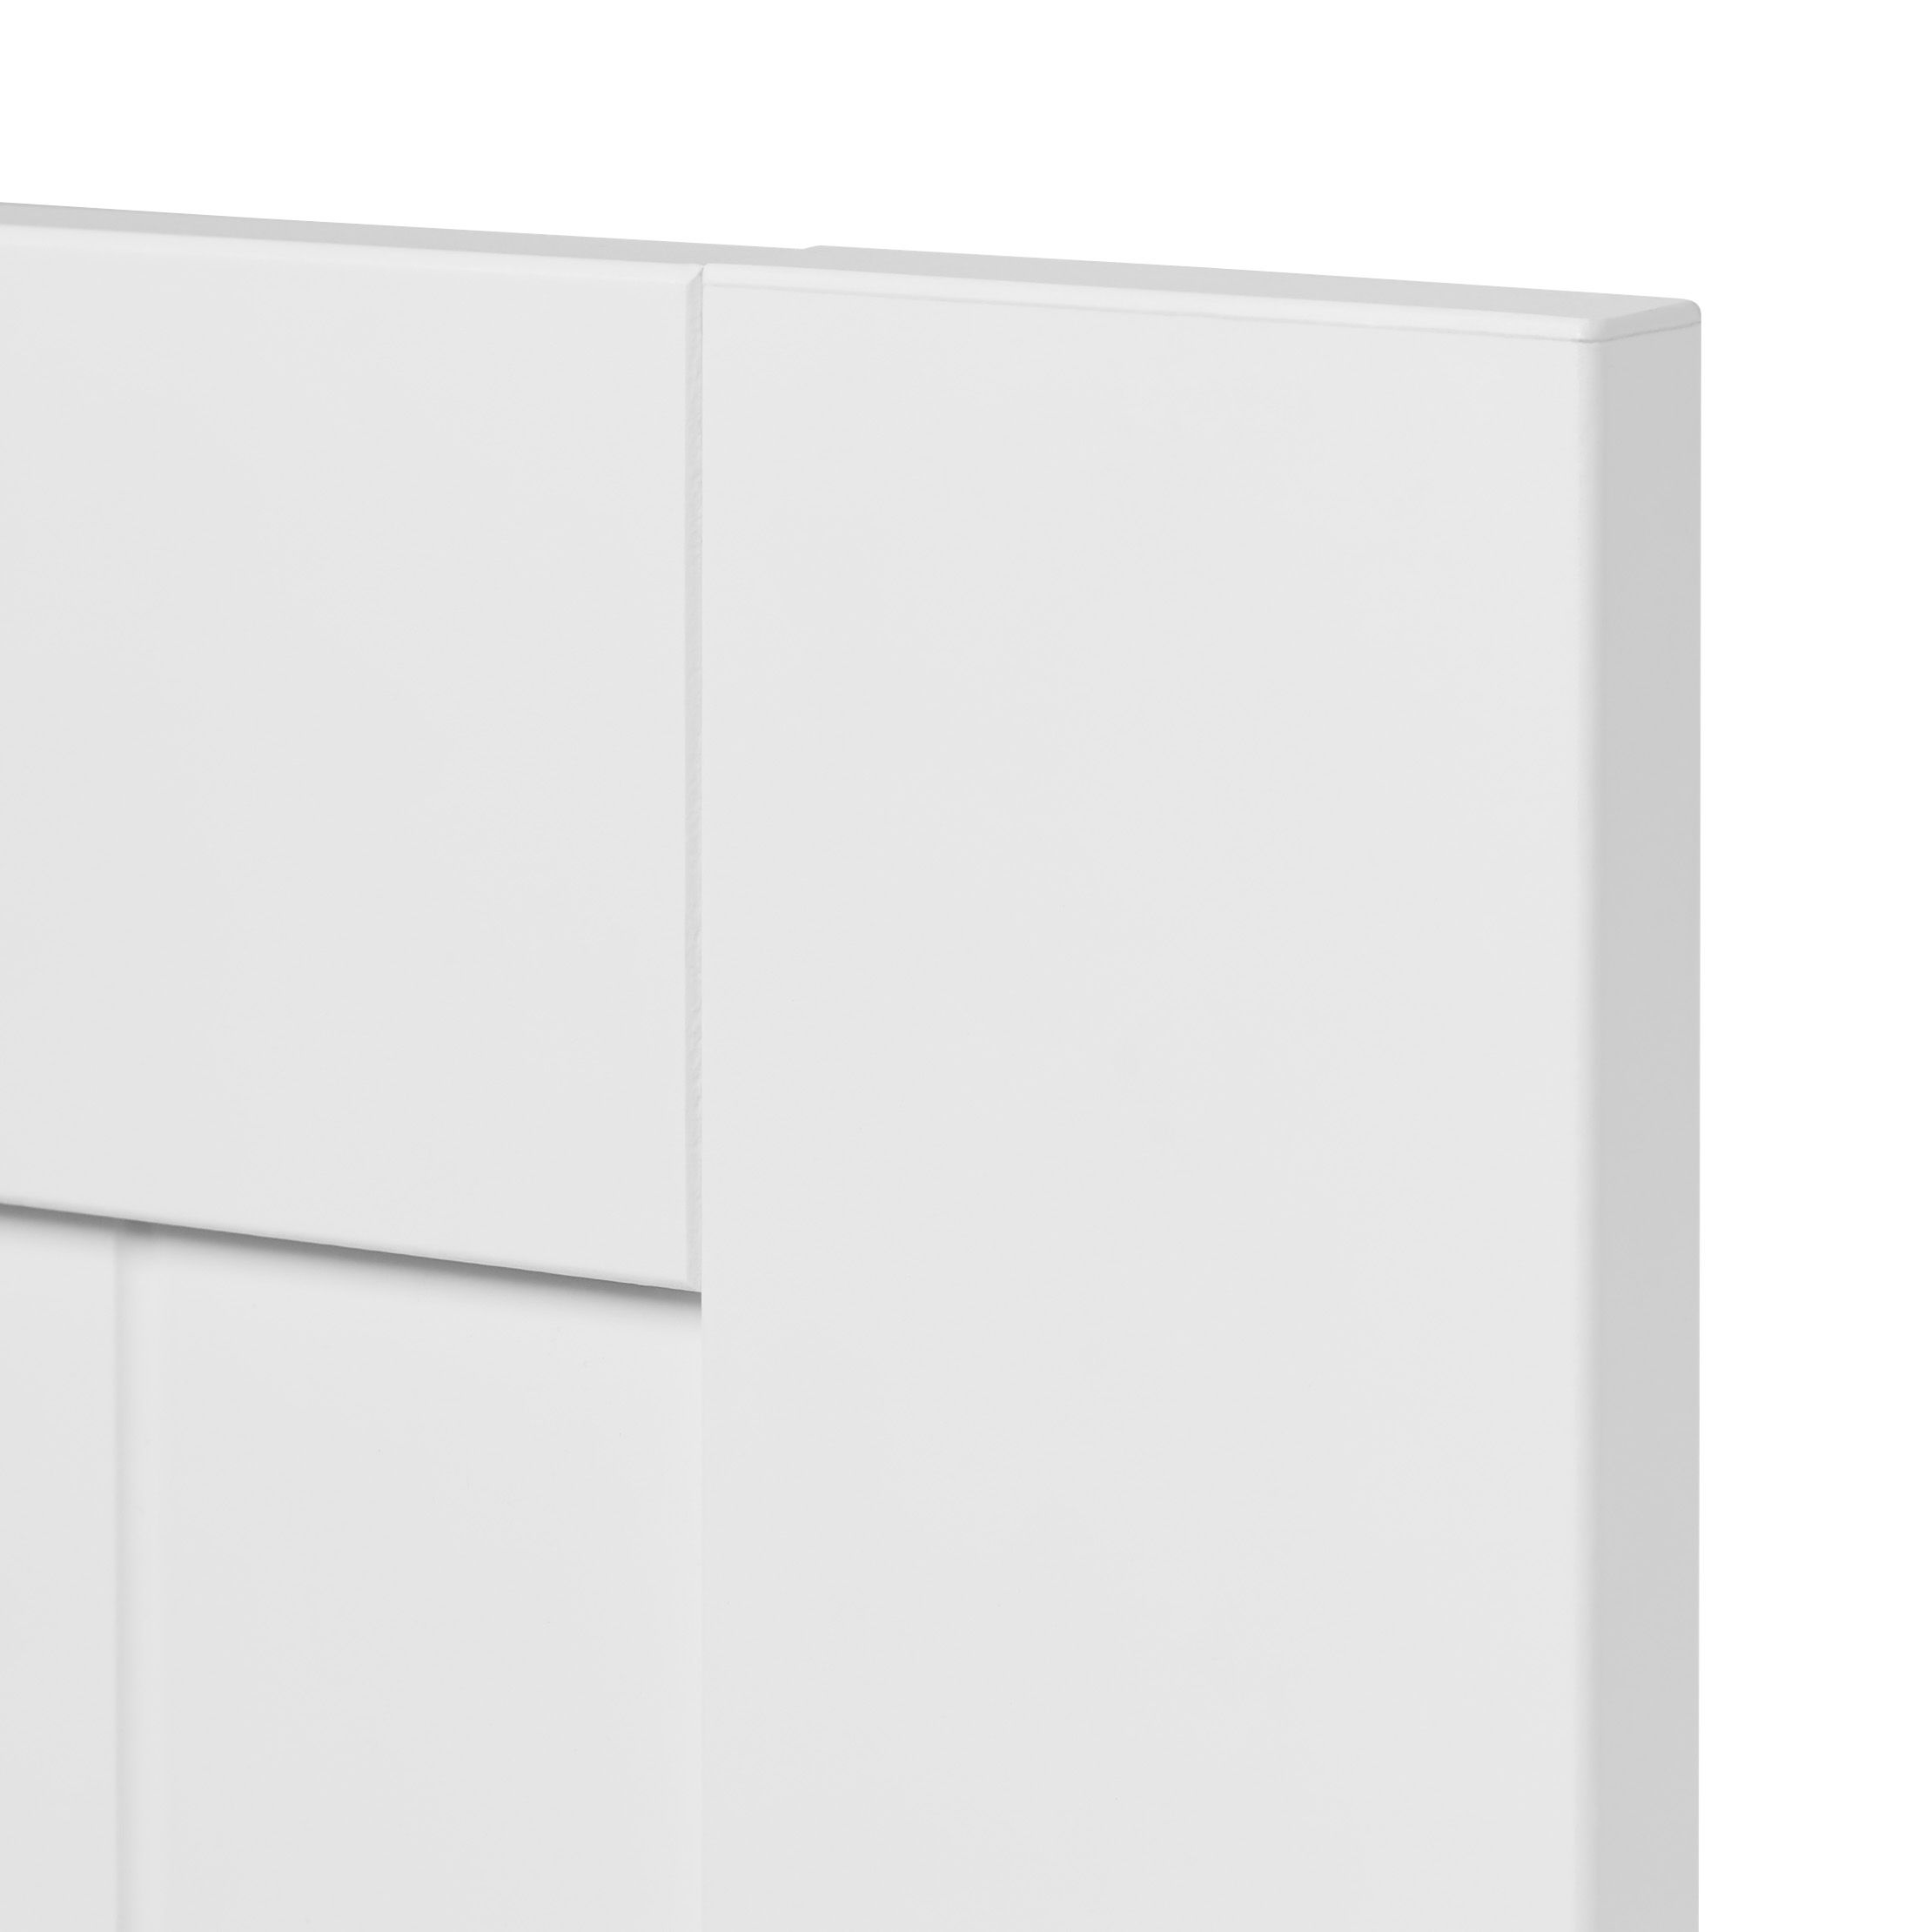 GoodHome Alpinia Matt white tongue & groove shaker Drawer front, bridging door & bi fold door, (W)500mm (H)356mm (T)18mm